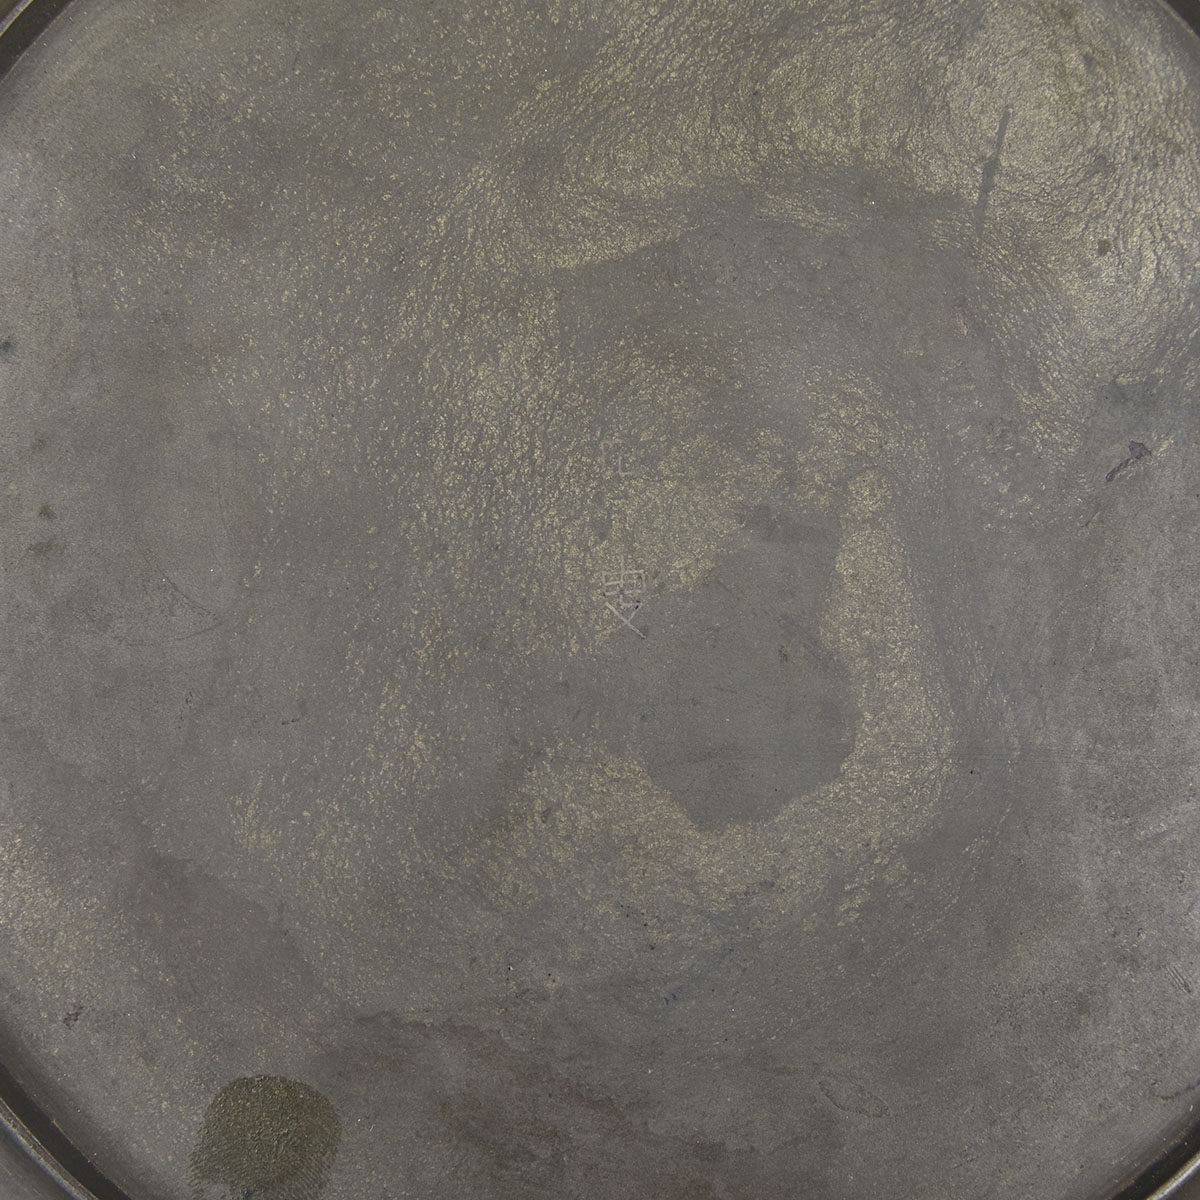 Bronze Silver Inlay ‘Dragon’ Dish, Shisou Mark, 18th/19th Century